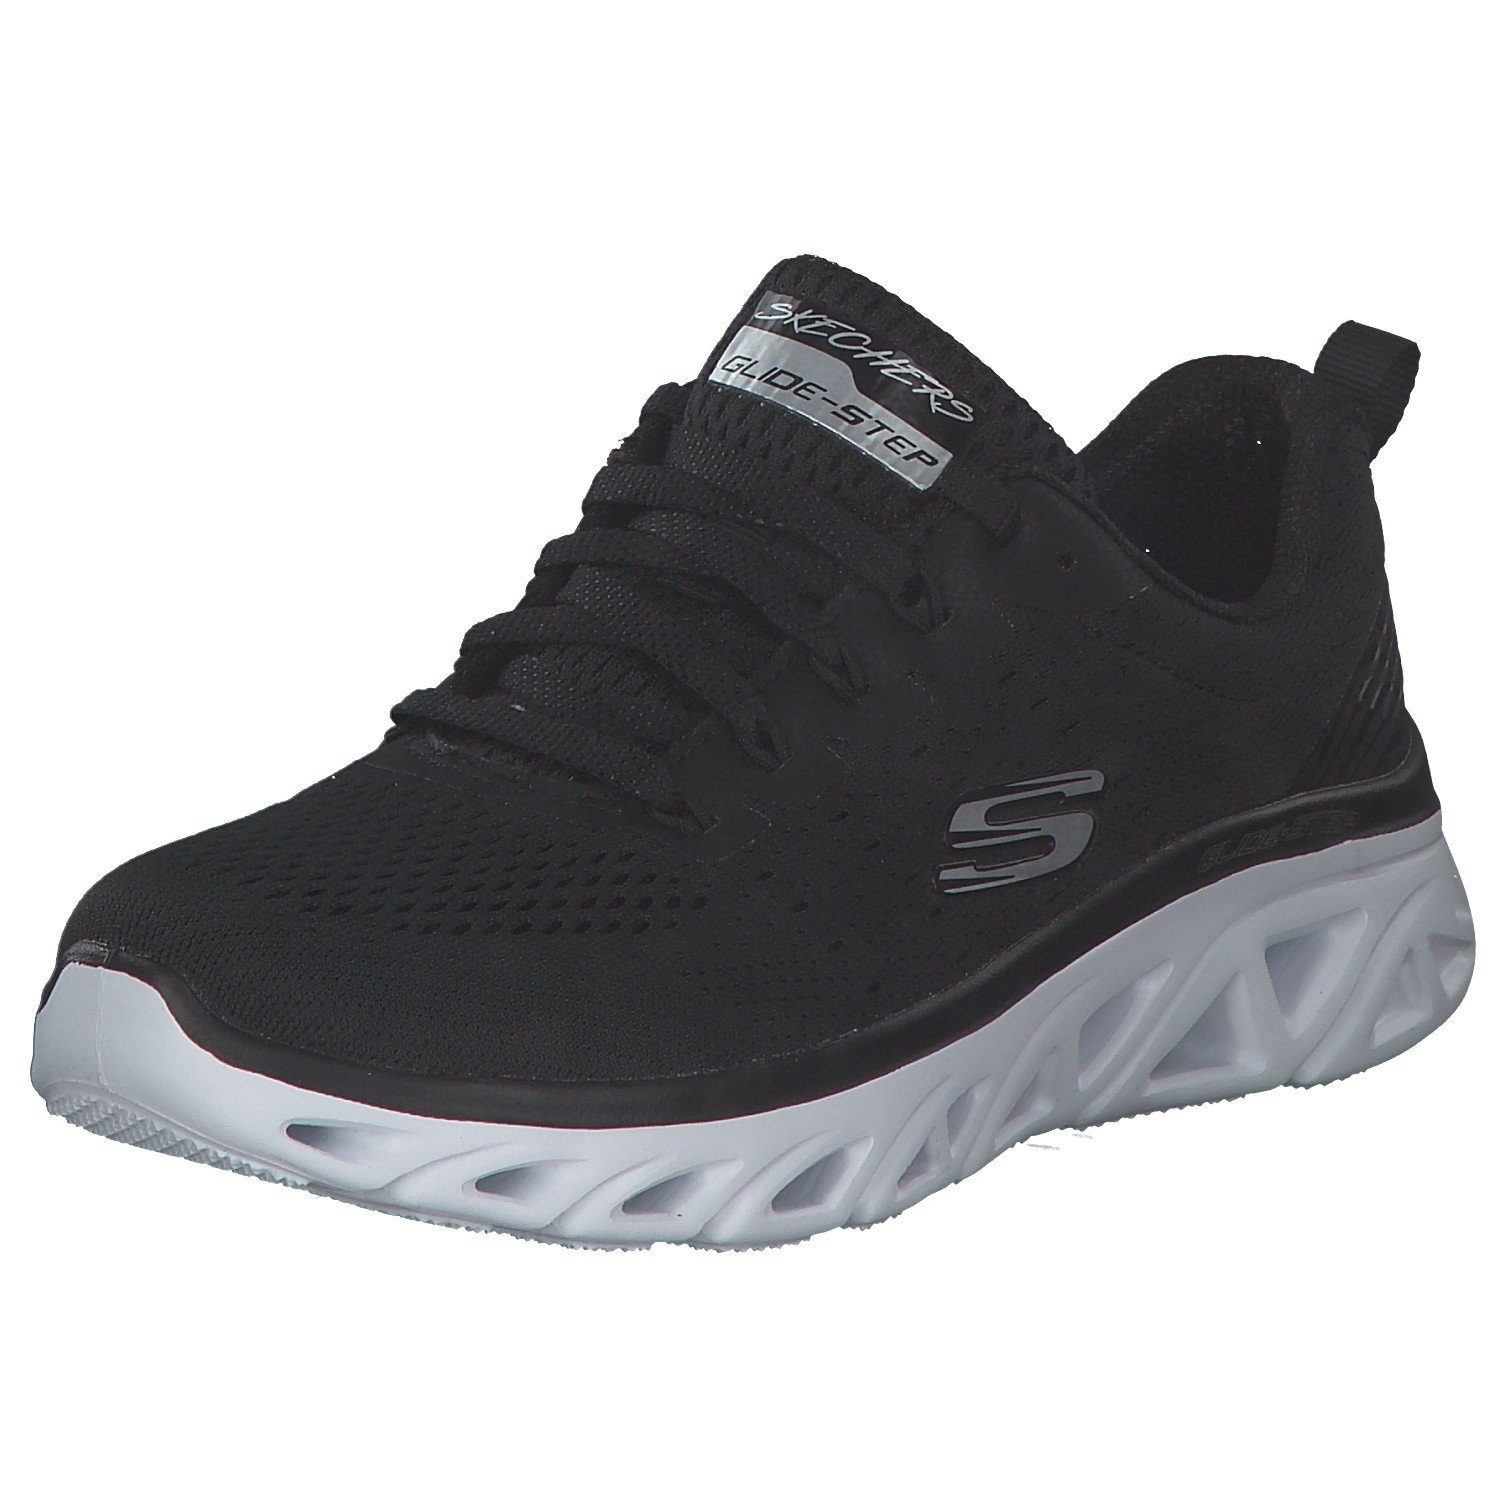 Skechers 149556 Sneaker BKW black white (20202798)